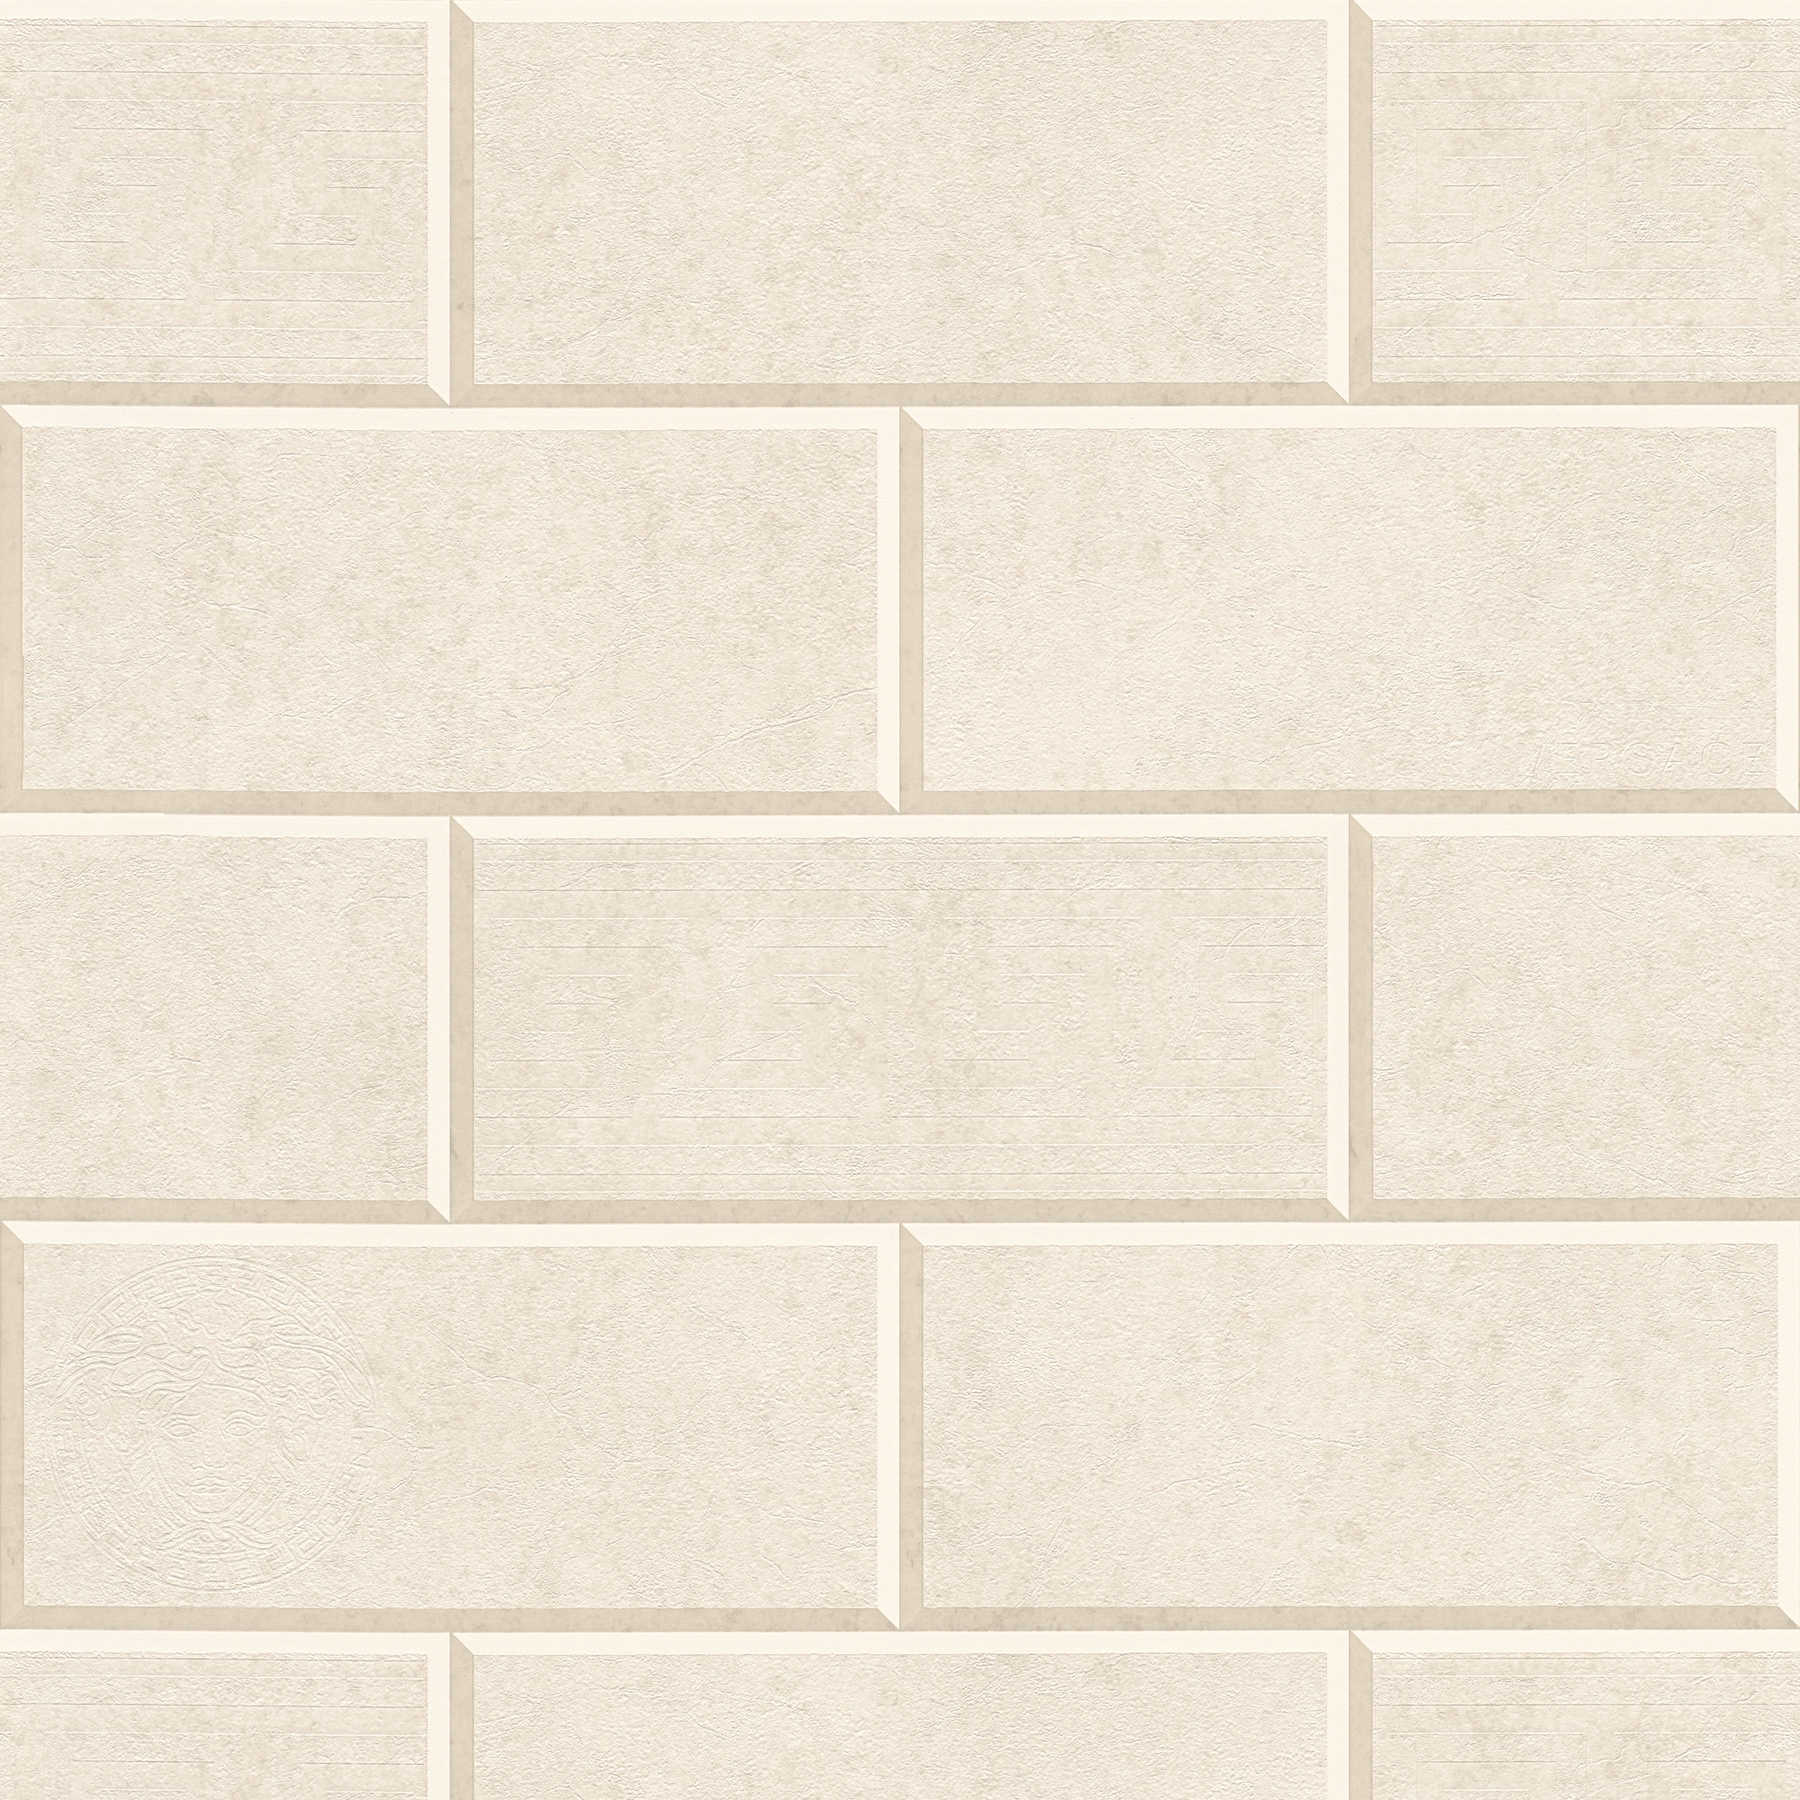 Wallpaper stone look sandstone masonry - beige, cream
